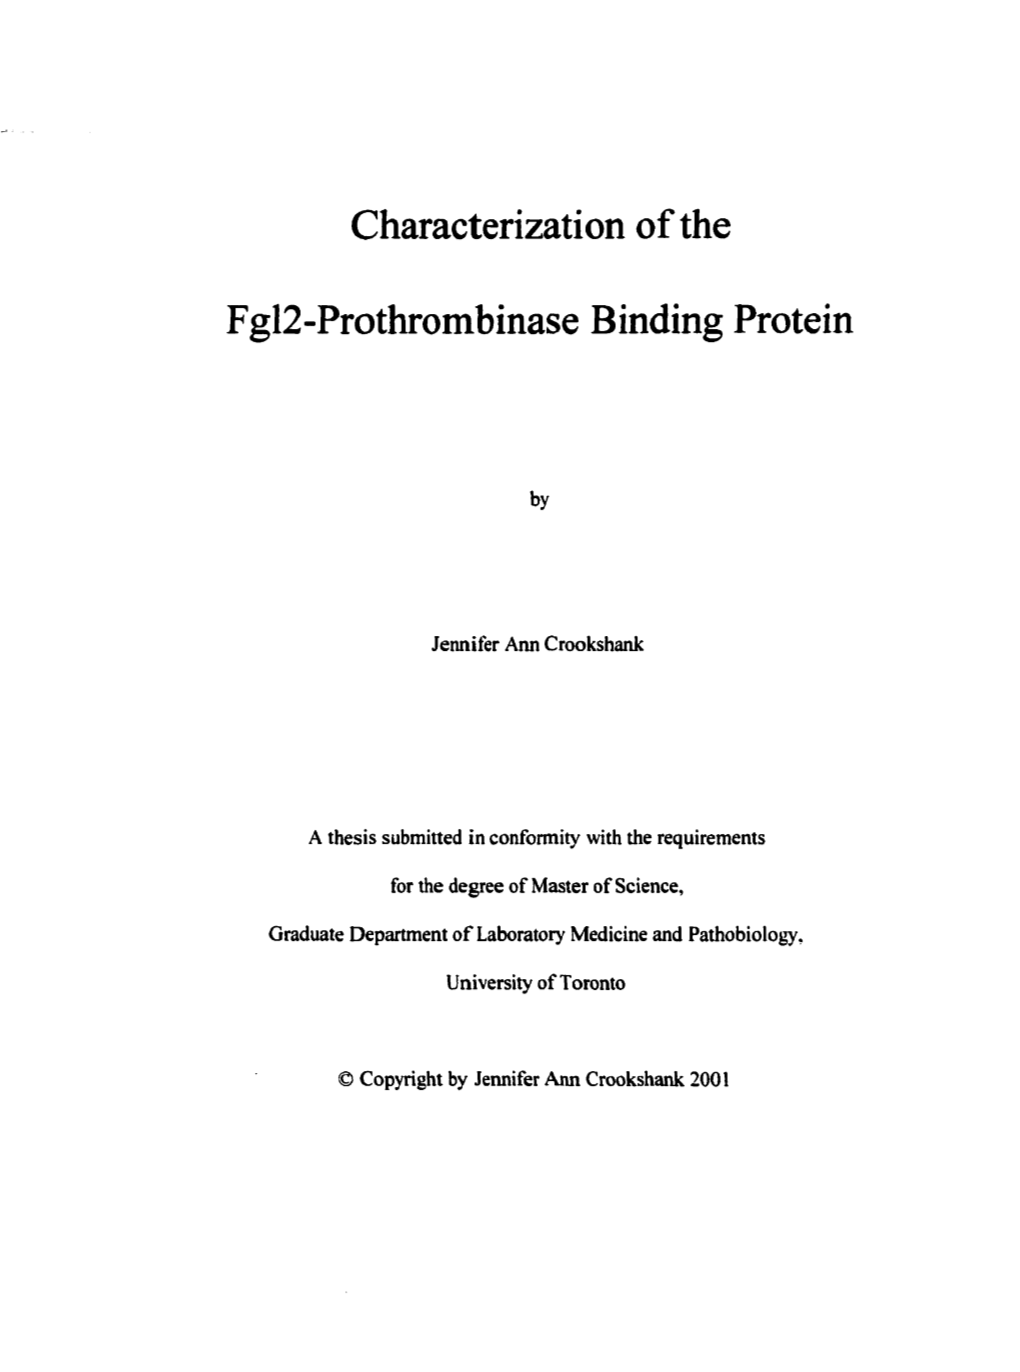 Characterization of the Fgl2-Prothrombinase Binding Protein